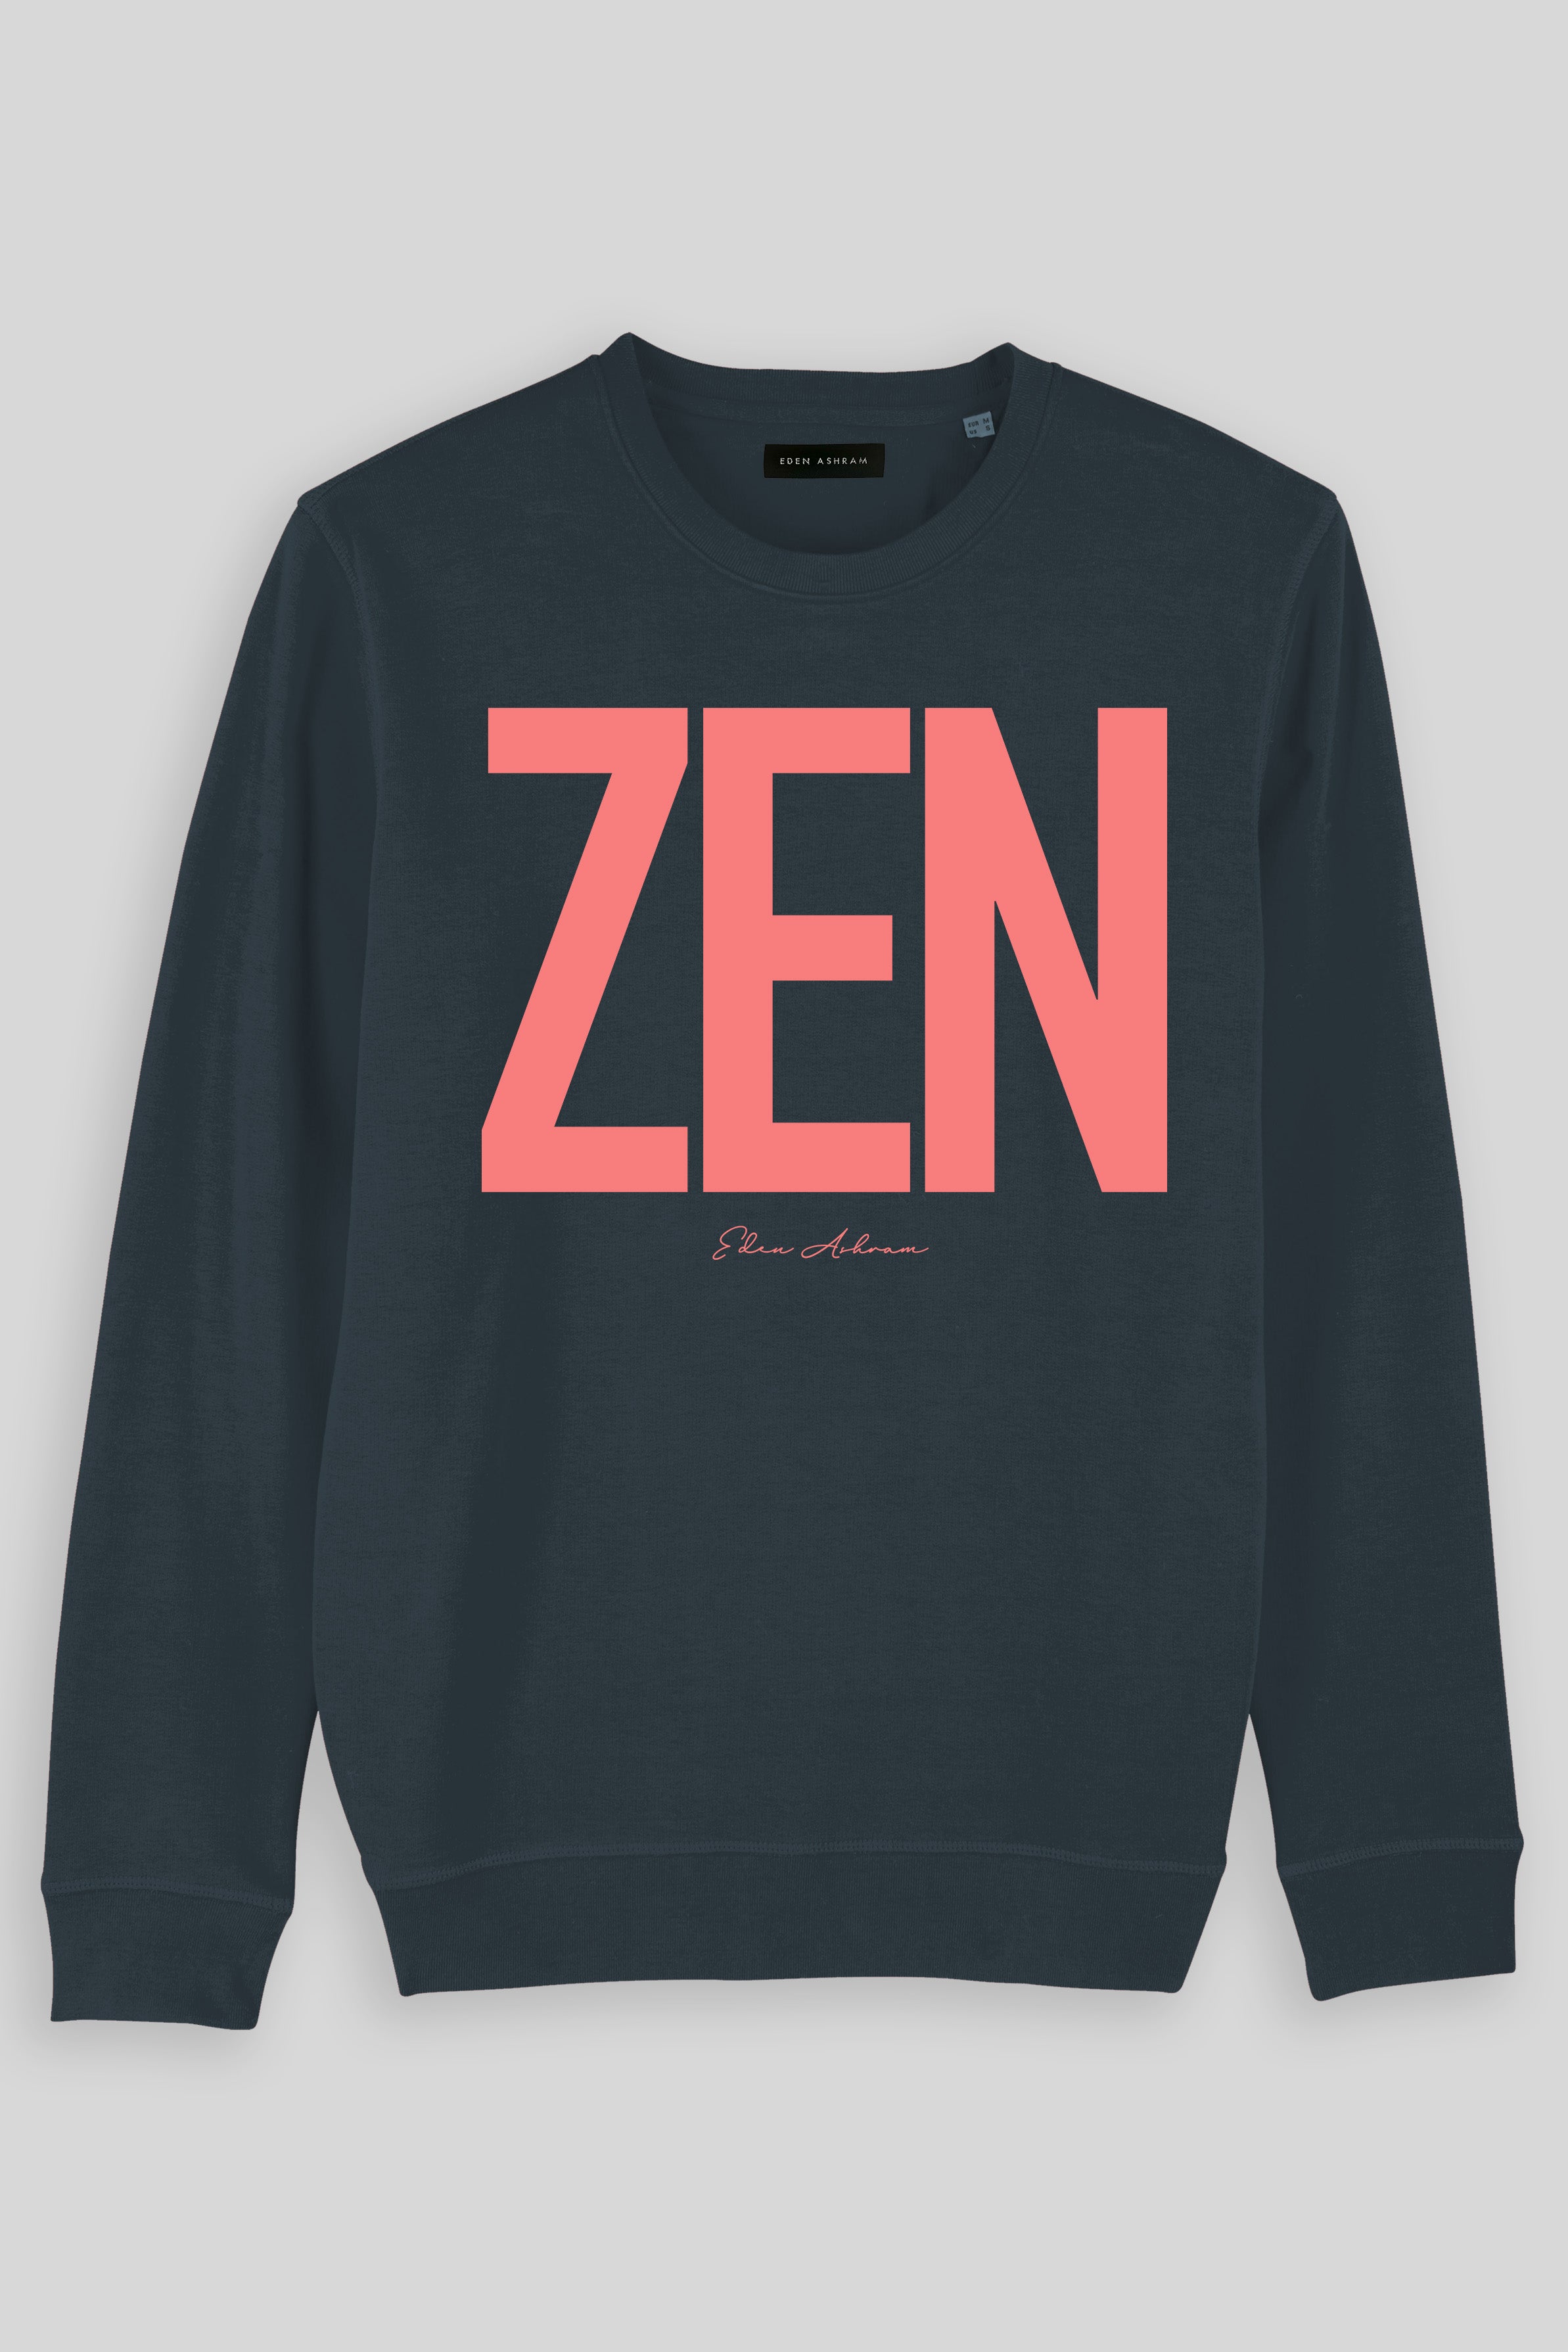 Eden Ashram ZEN Premium Crew Neck Sweatshirt India Ink Grey